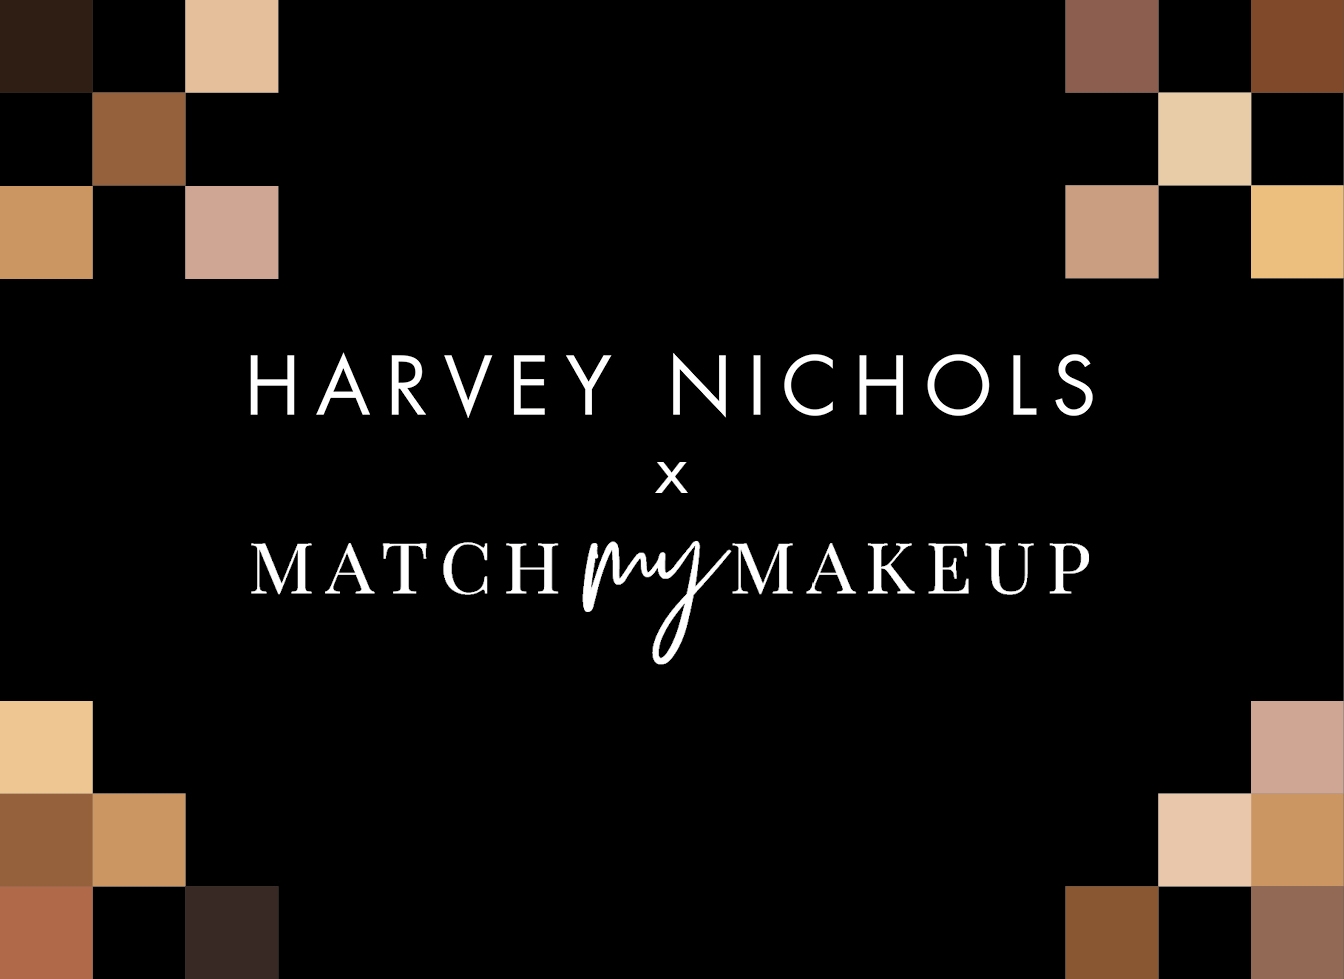 MATCH MY MAKEUP - Harvey Nichols Harvey Nichols